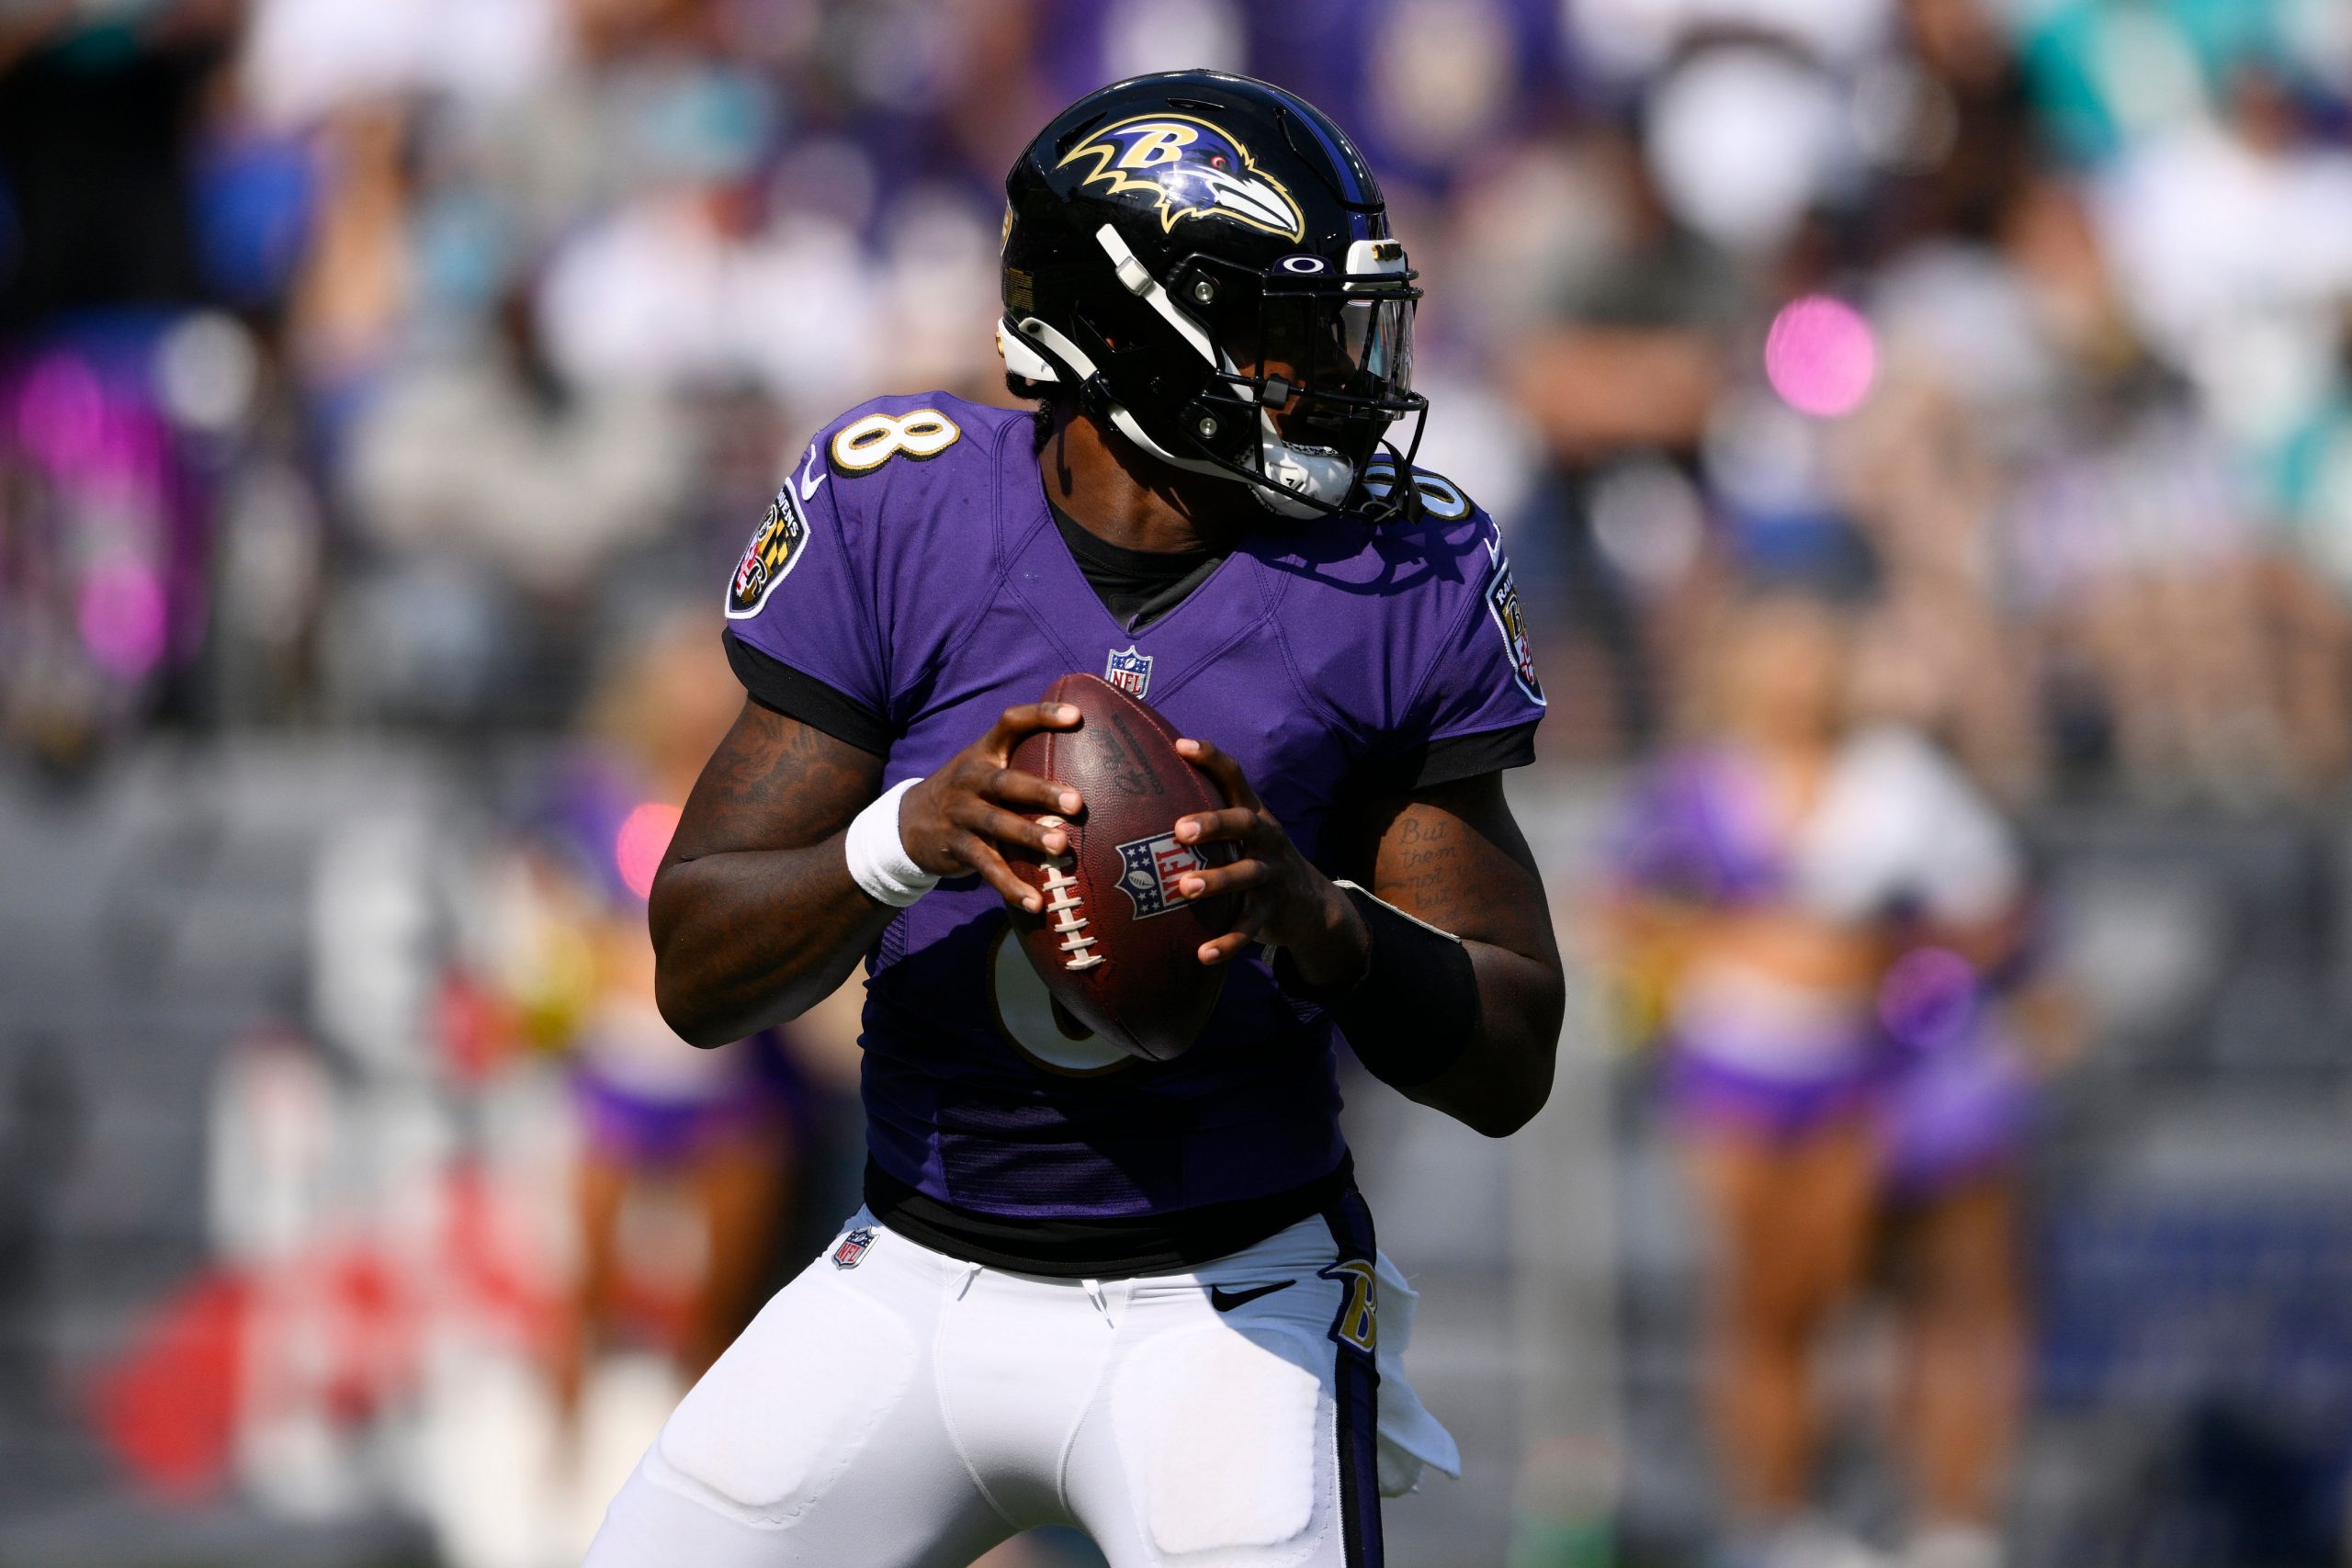 Watch: All touchdowns by Baltimore Ravens QB Lamar Jackson vs New England Patriots